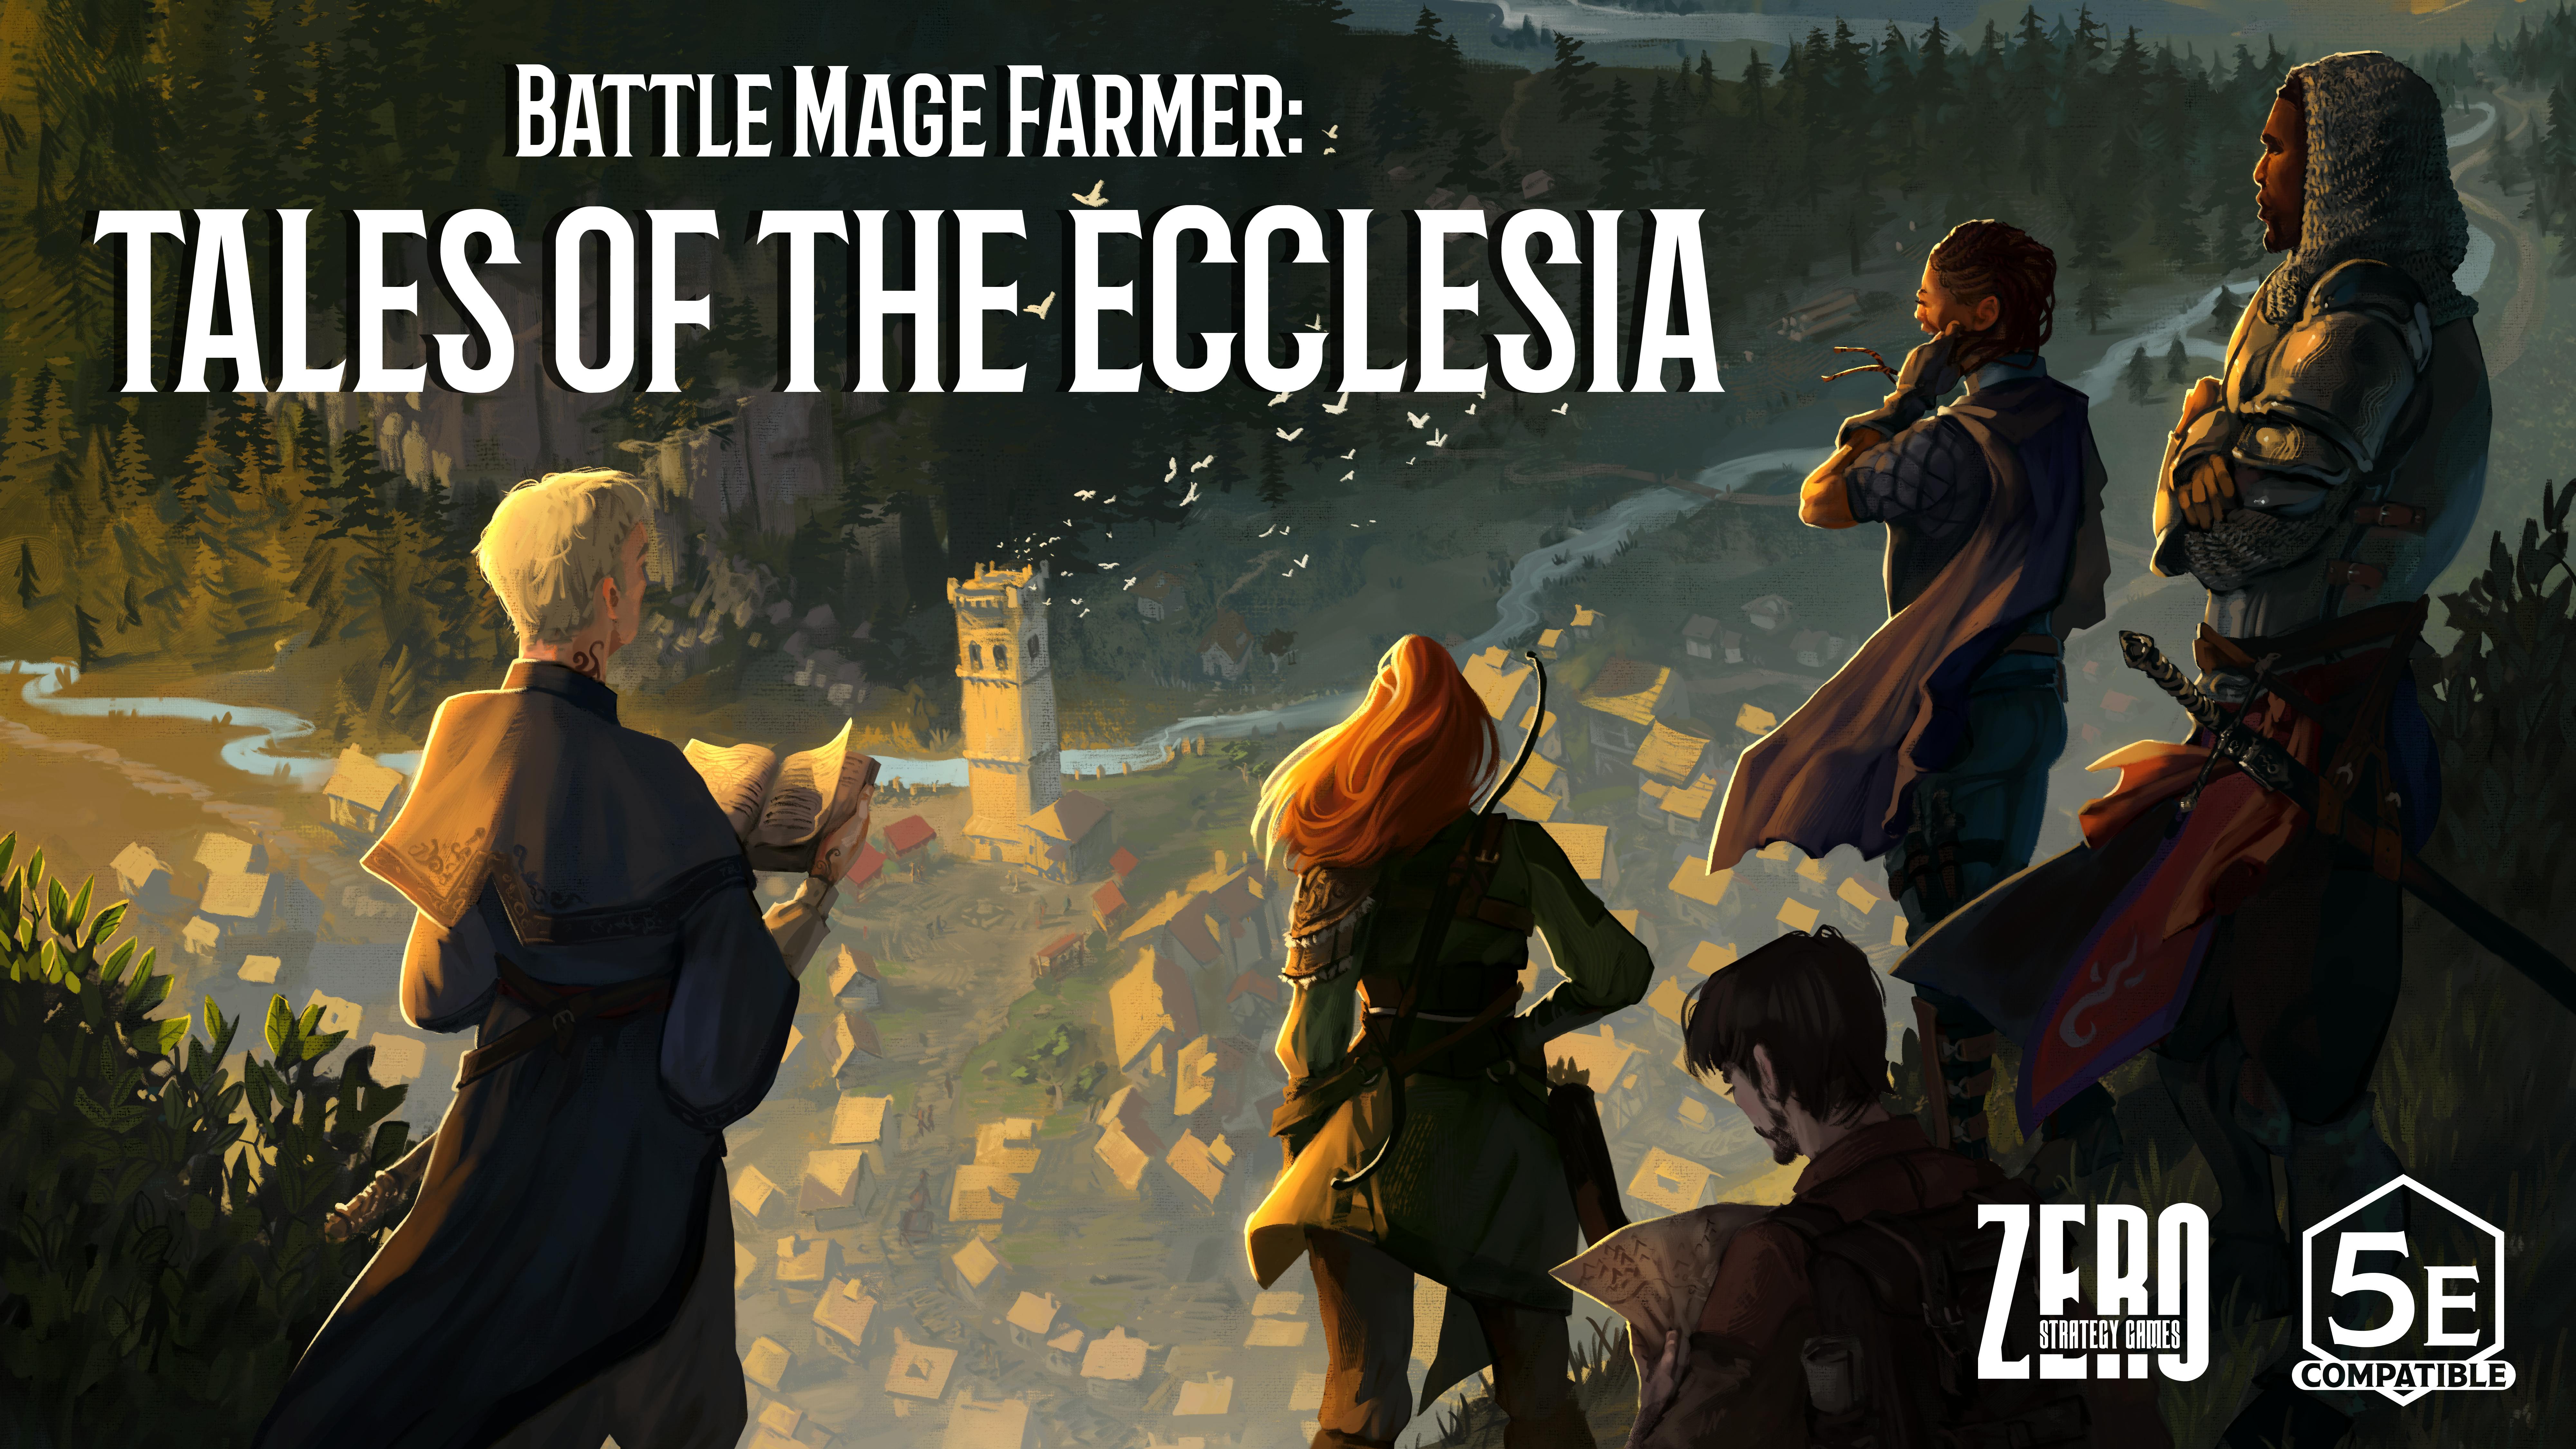 Battle Mage Farmer: Tales of the Ecclesia (D&D 5e Adventure and Novella)